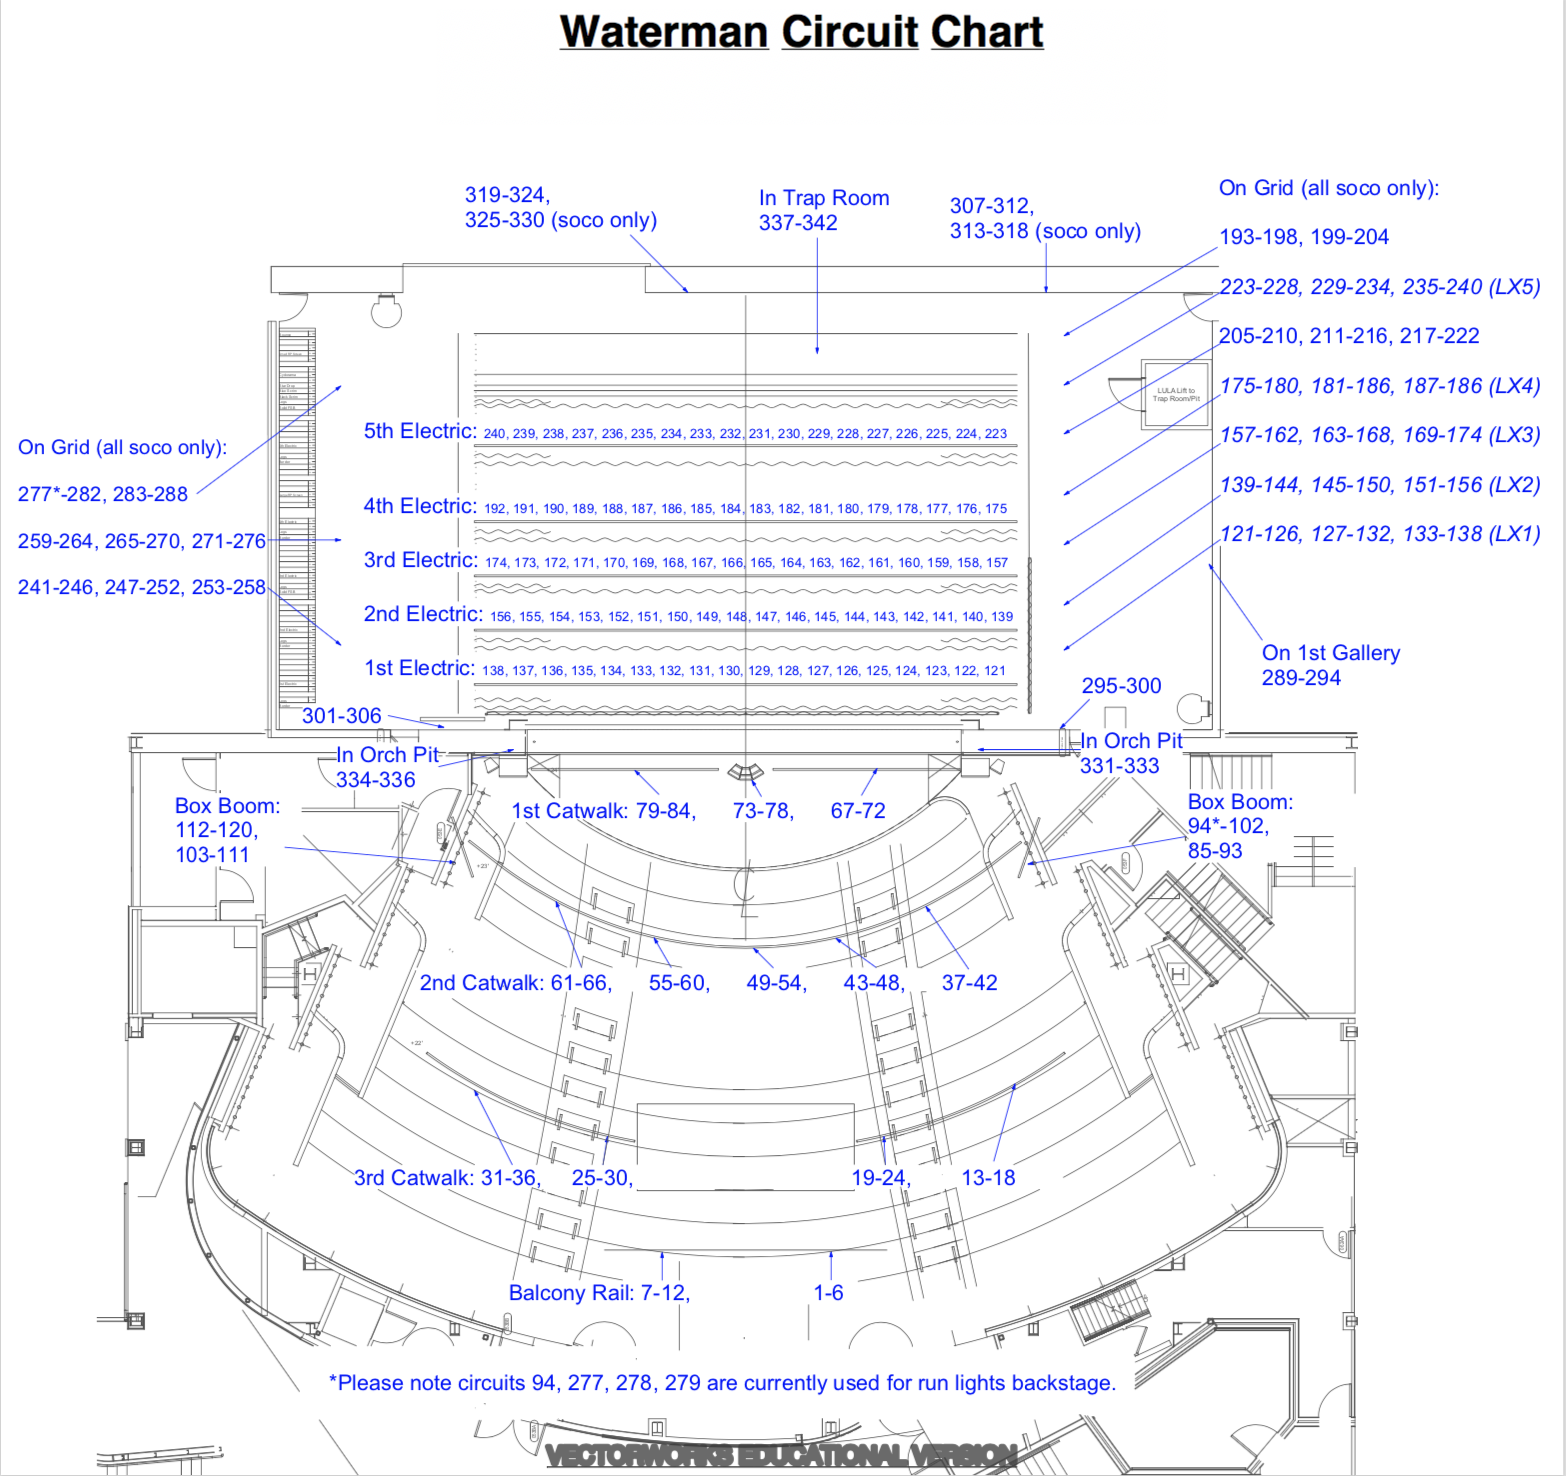 Waterman Circuit Chart